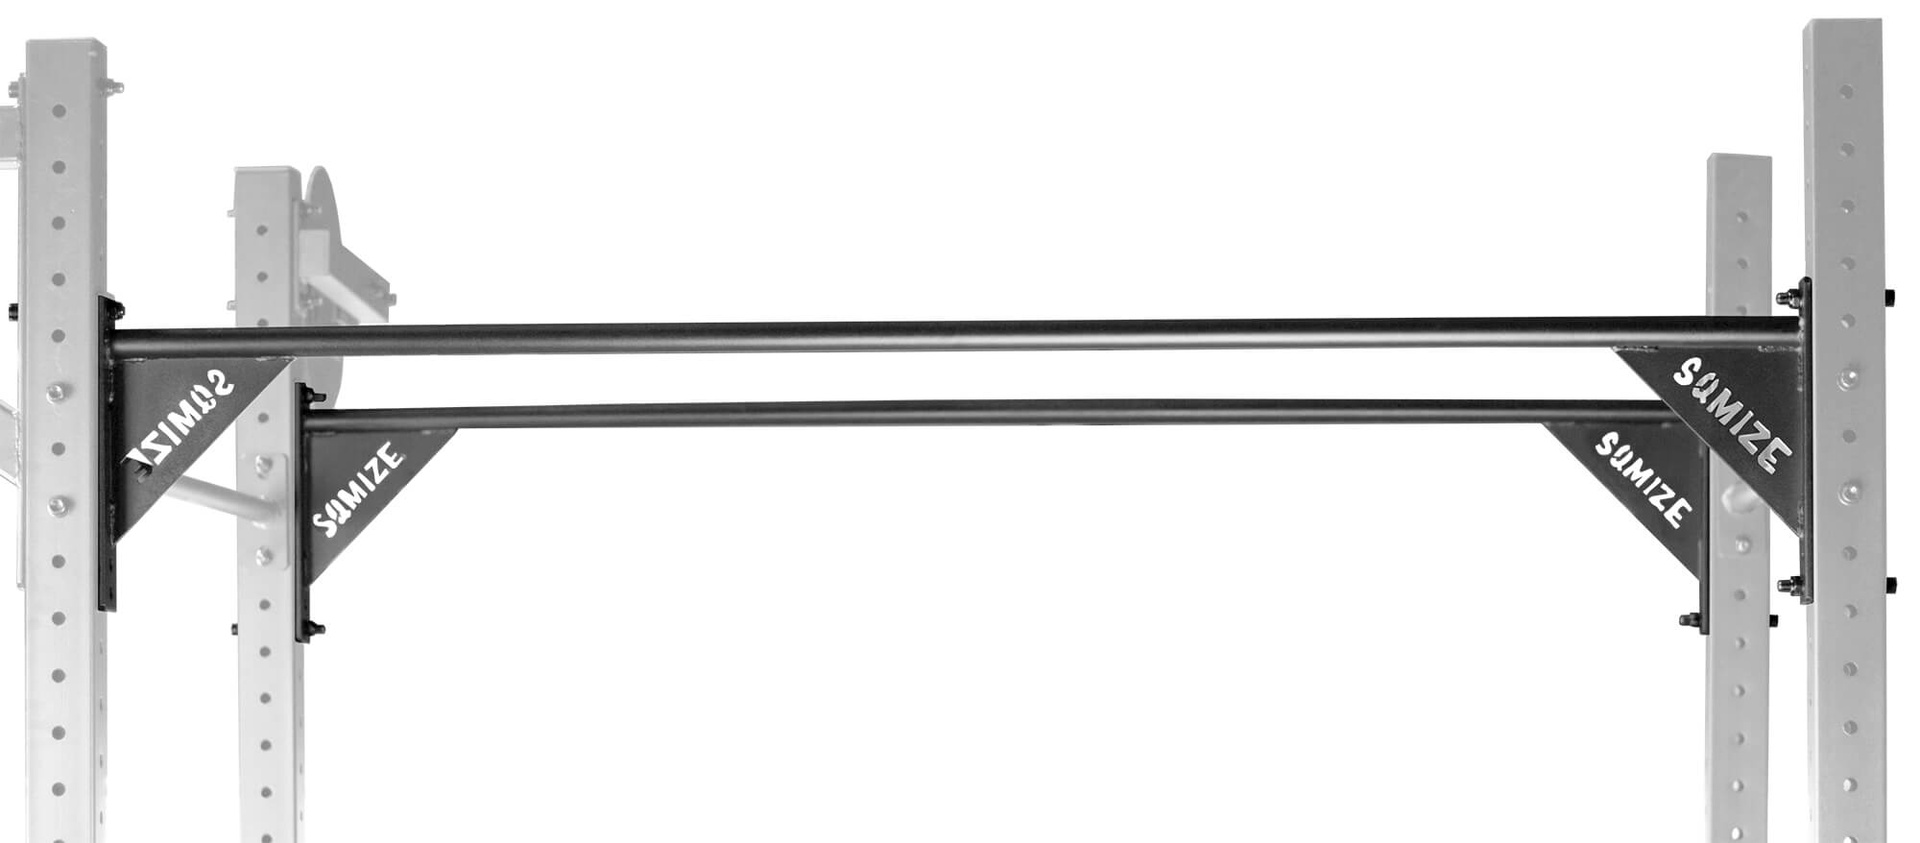 SQMIZE® Pull-Up Bar MR-S6, 180 cm